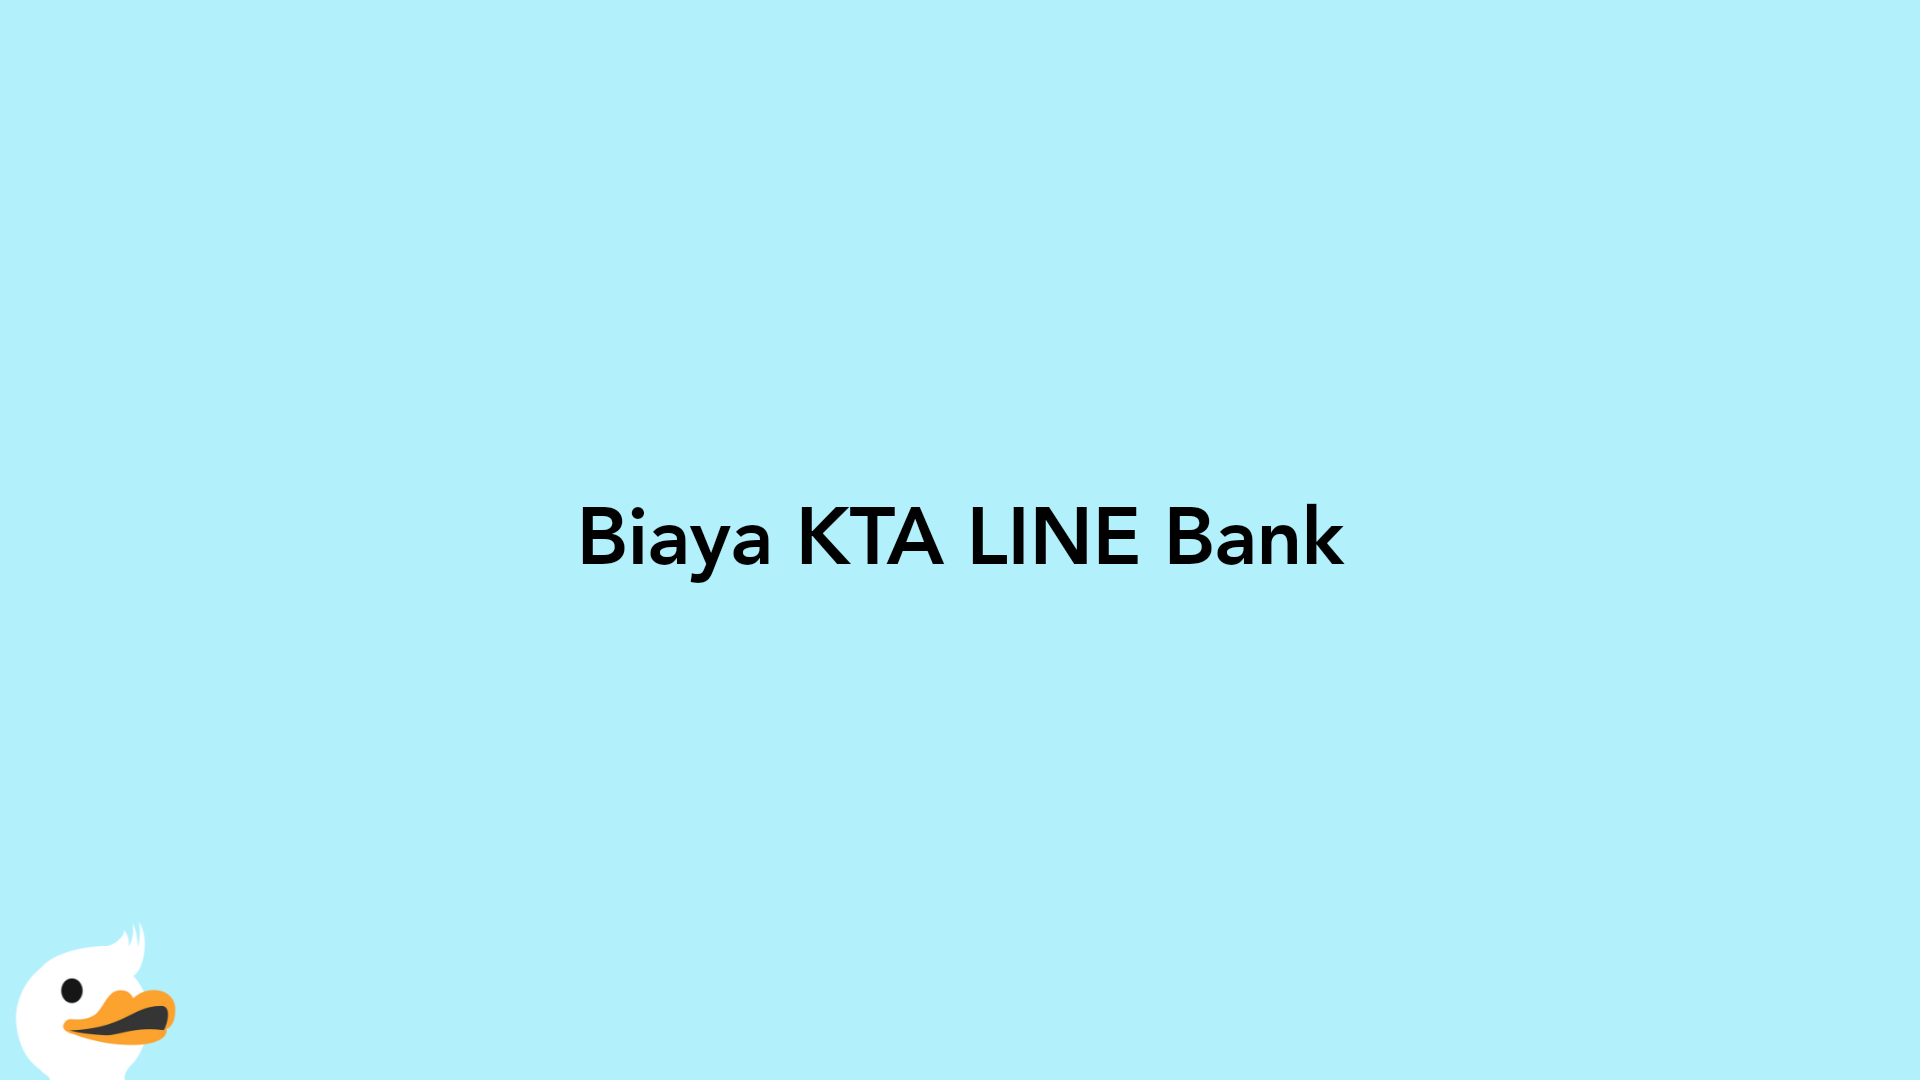 Biaya KTA LINE Bank